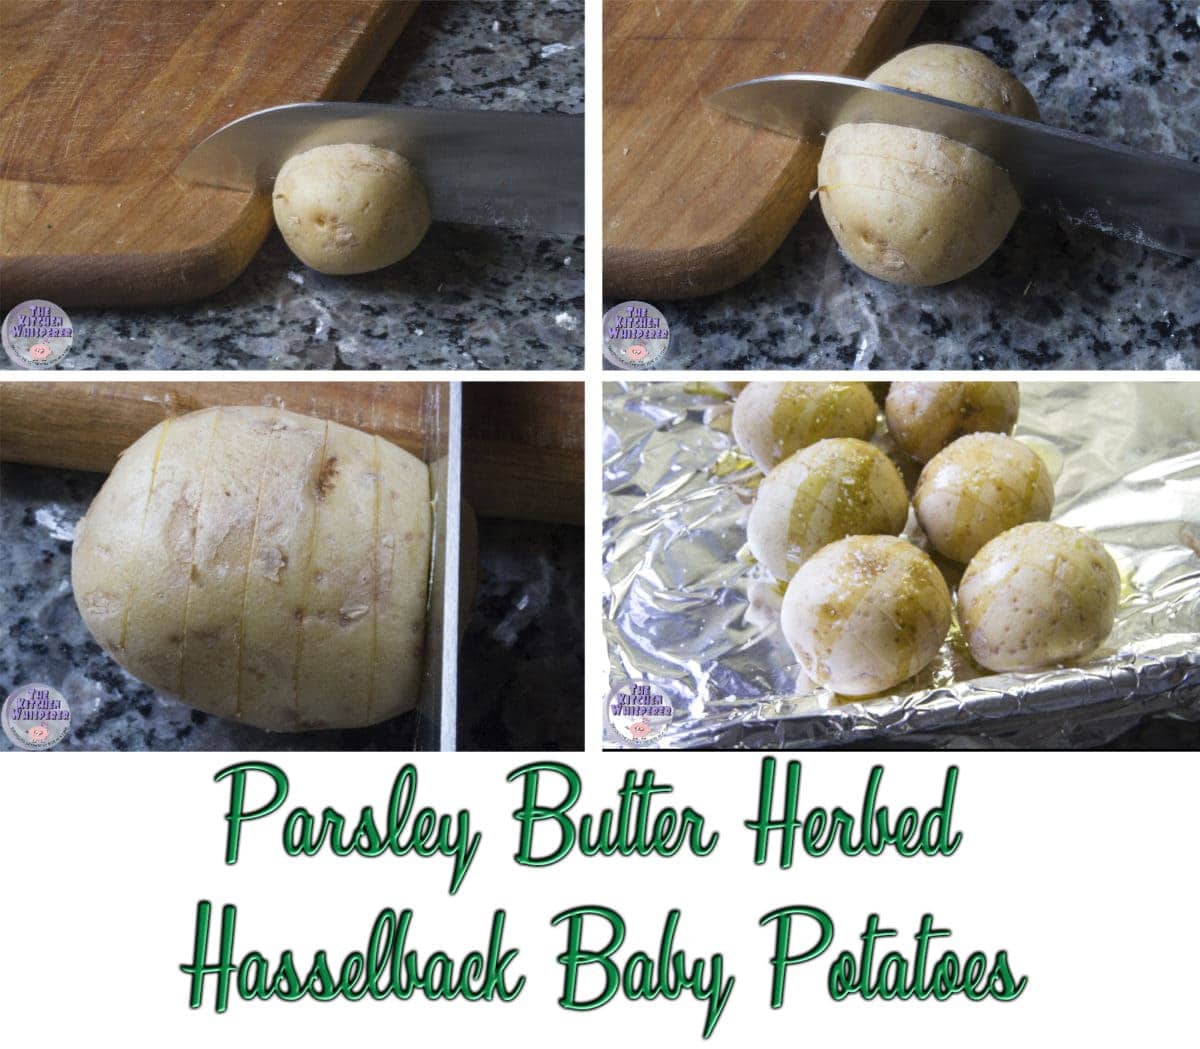 Sheet Pan Savory Brown Sugar Pork Tenderloin with Hasselback Potatoes and Stuffed Mushrooms